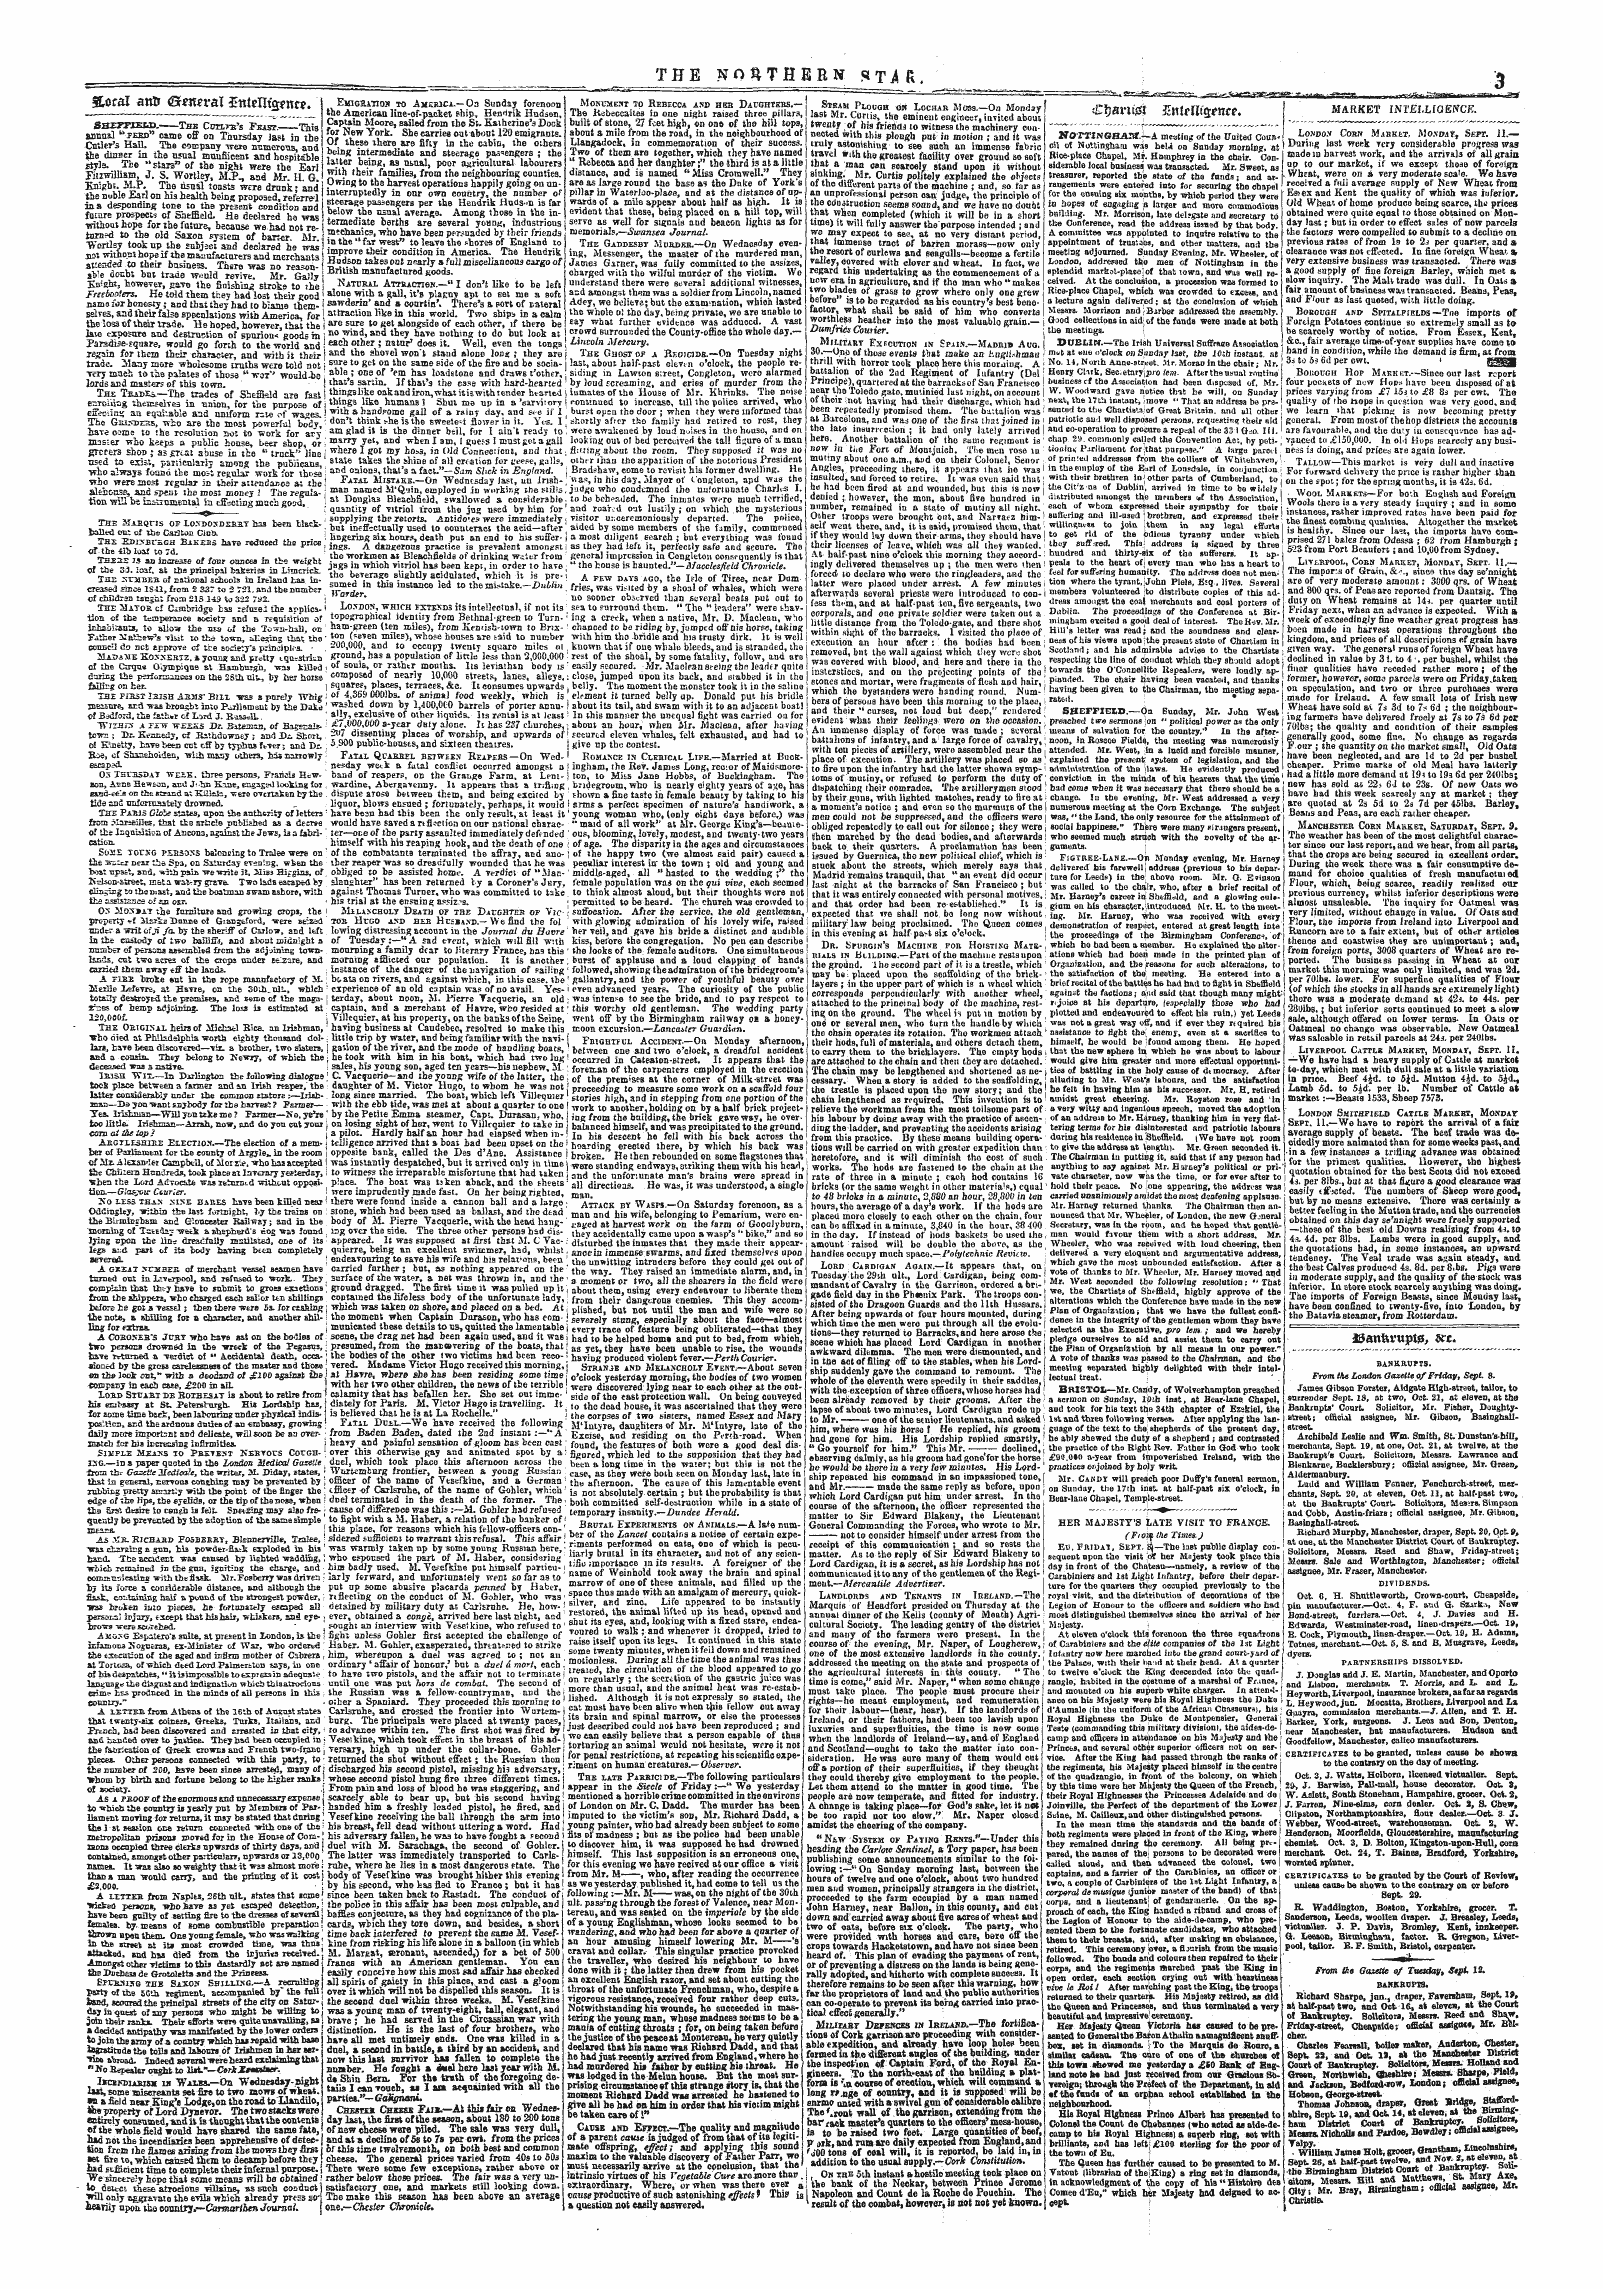 Northern Star (1837-1852): jS F Y, 5th edition - Jtfanfcvupte, &C.